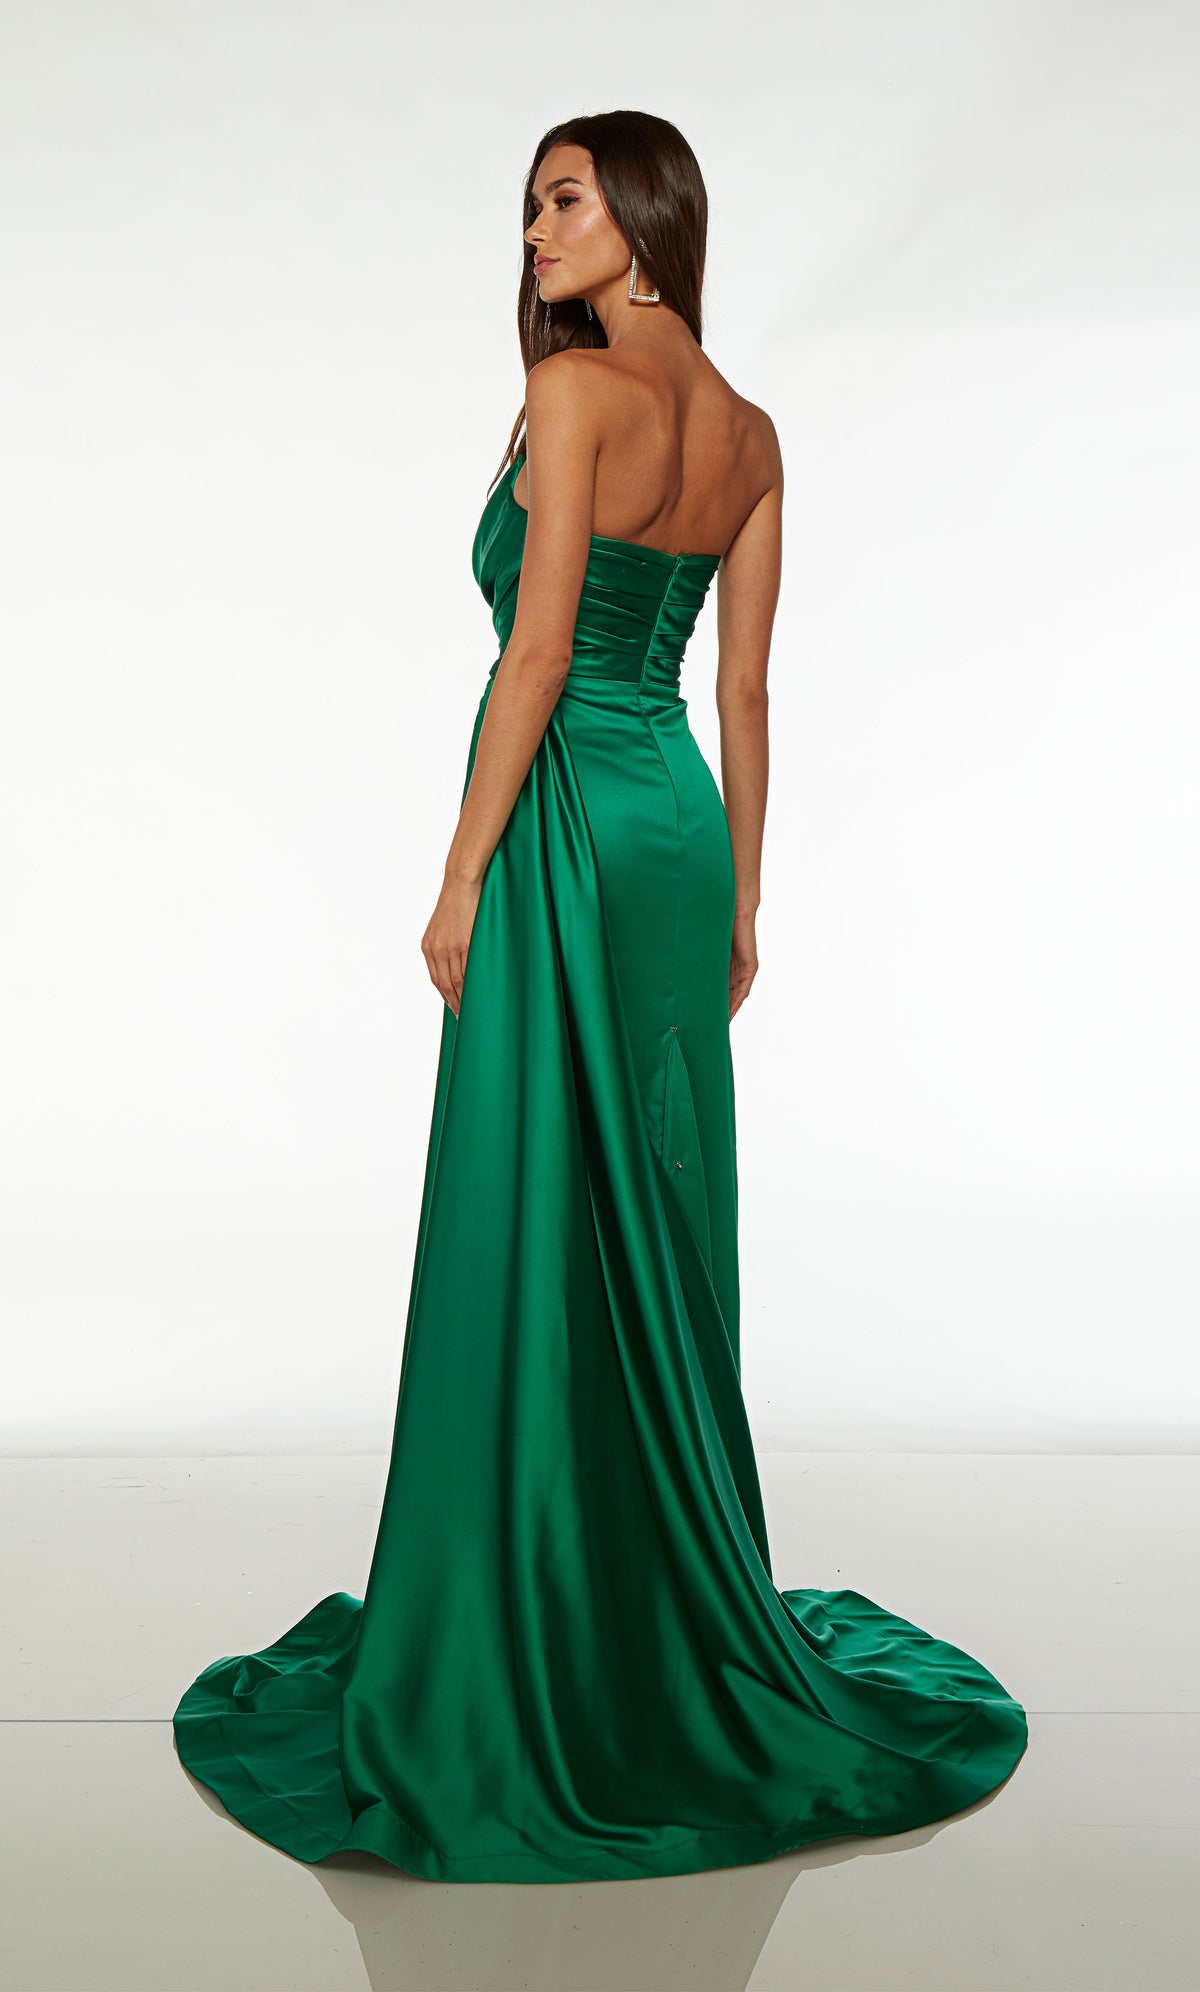 Emerald green satin off-shoulder prom dress: cowl neckline, gathered bodice, slit, detachable straps, side train—an chic and versatile ensemble.